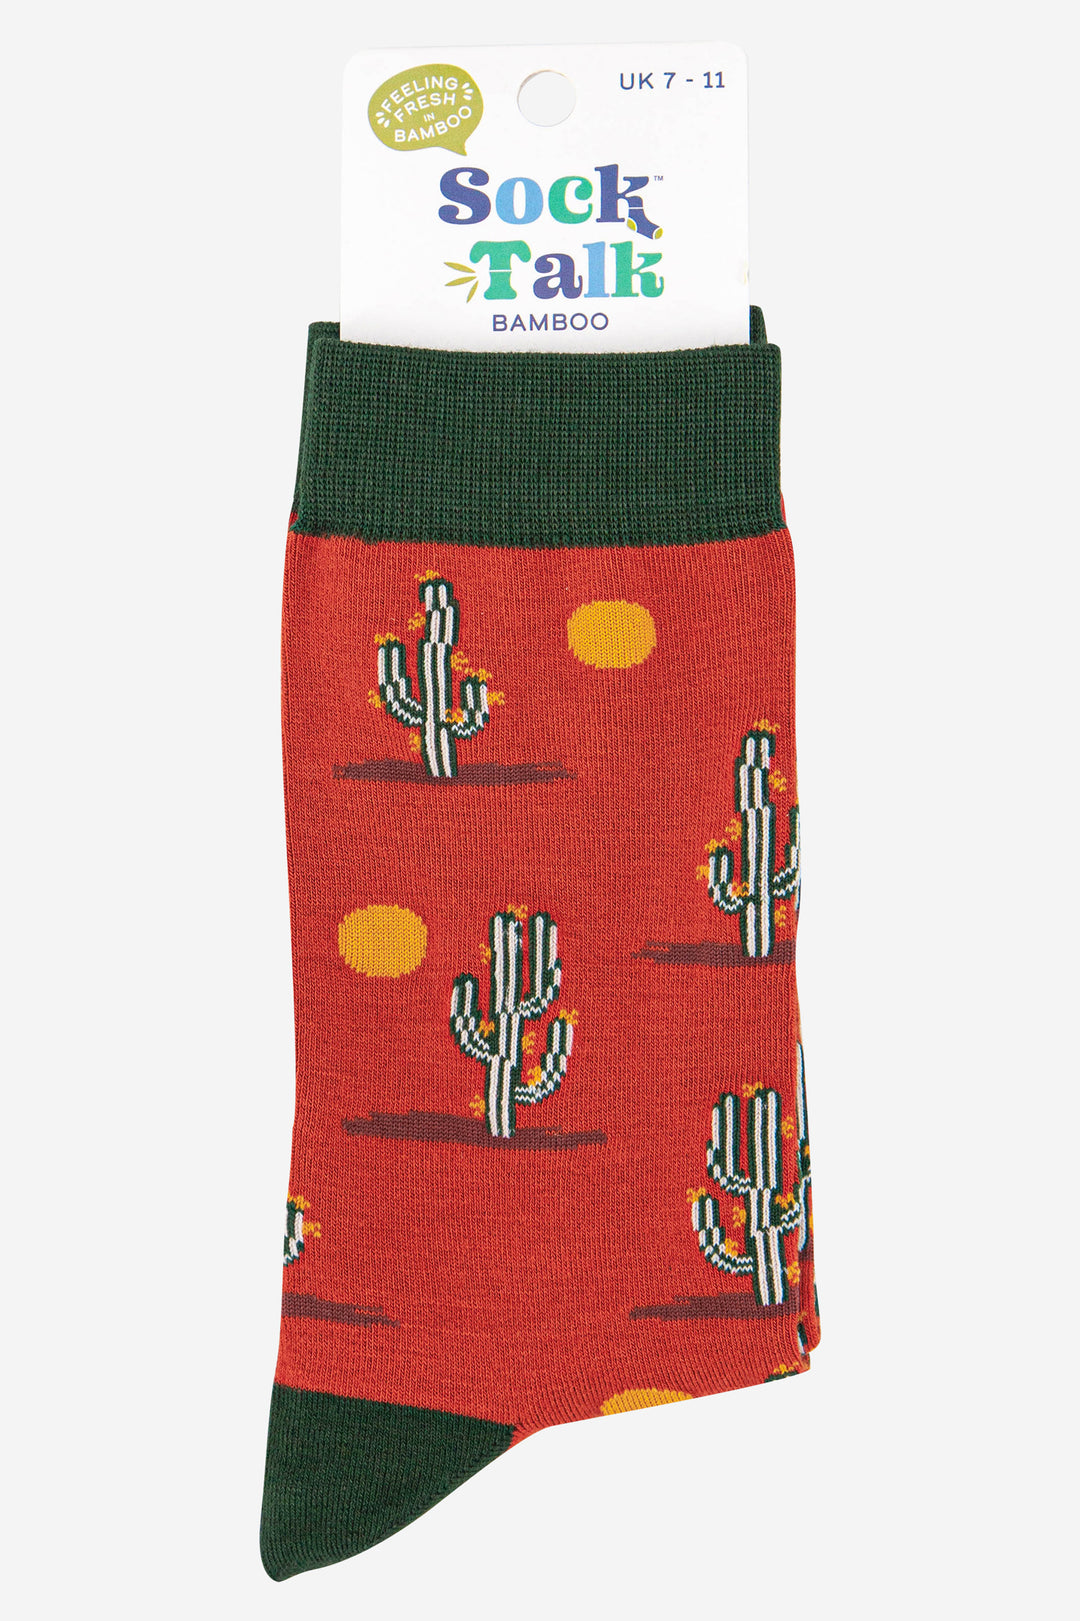 mens desert sun and cactus print dress socks in burnt orange and khaki green